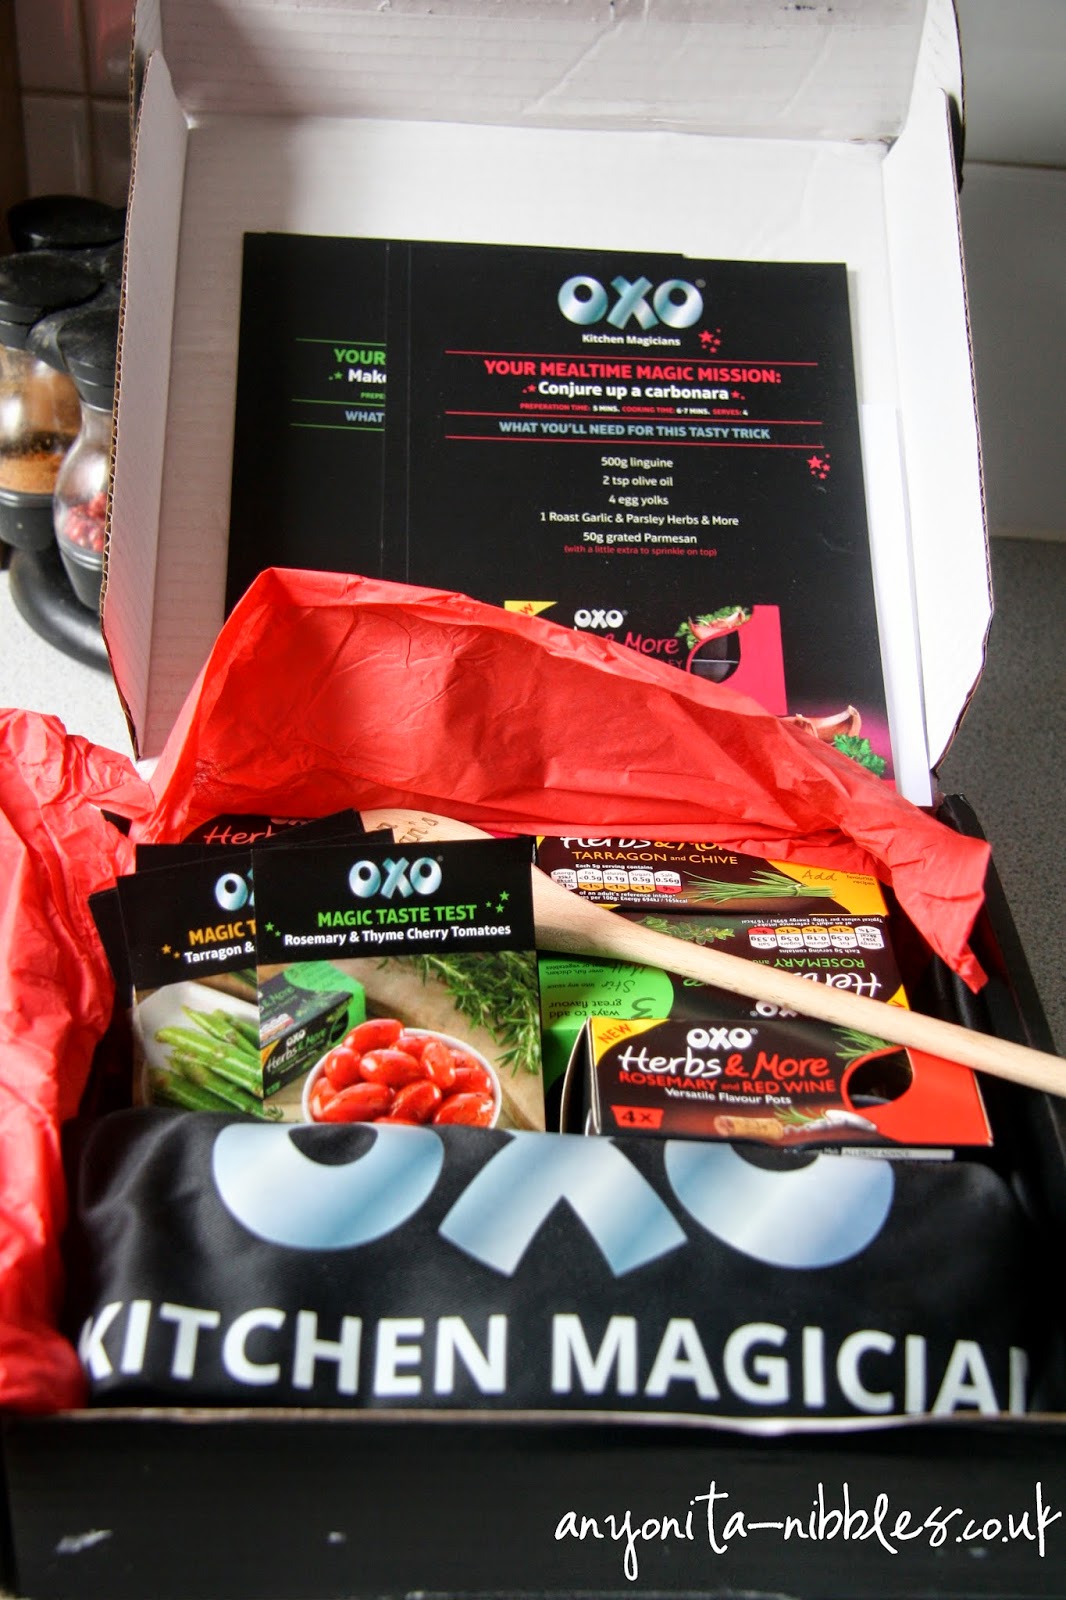 OXO Kitchen Magician Kit from Anyonita-nibbles.co.uk